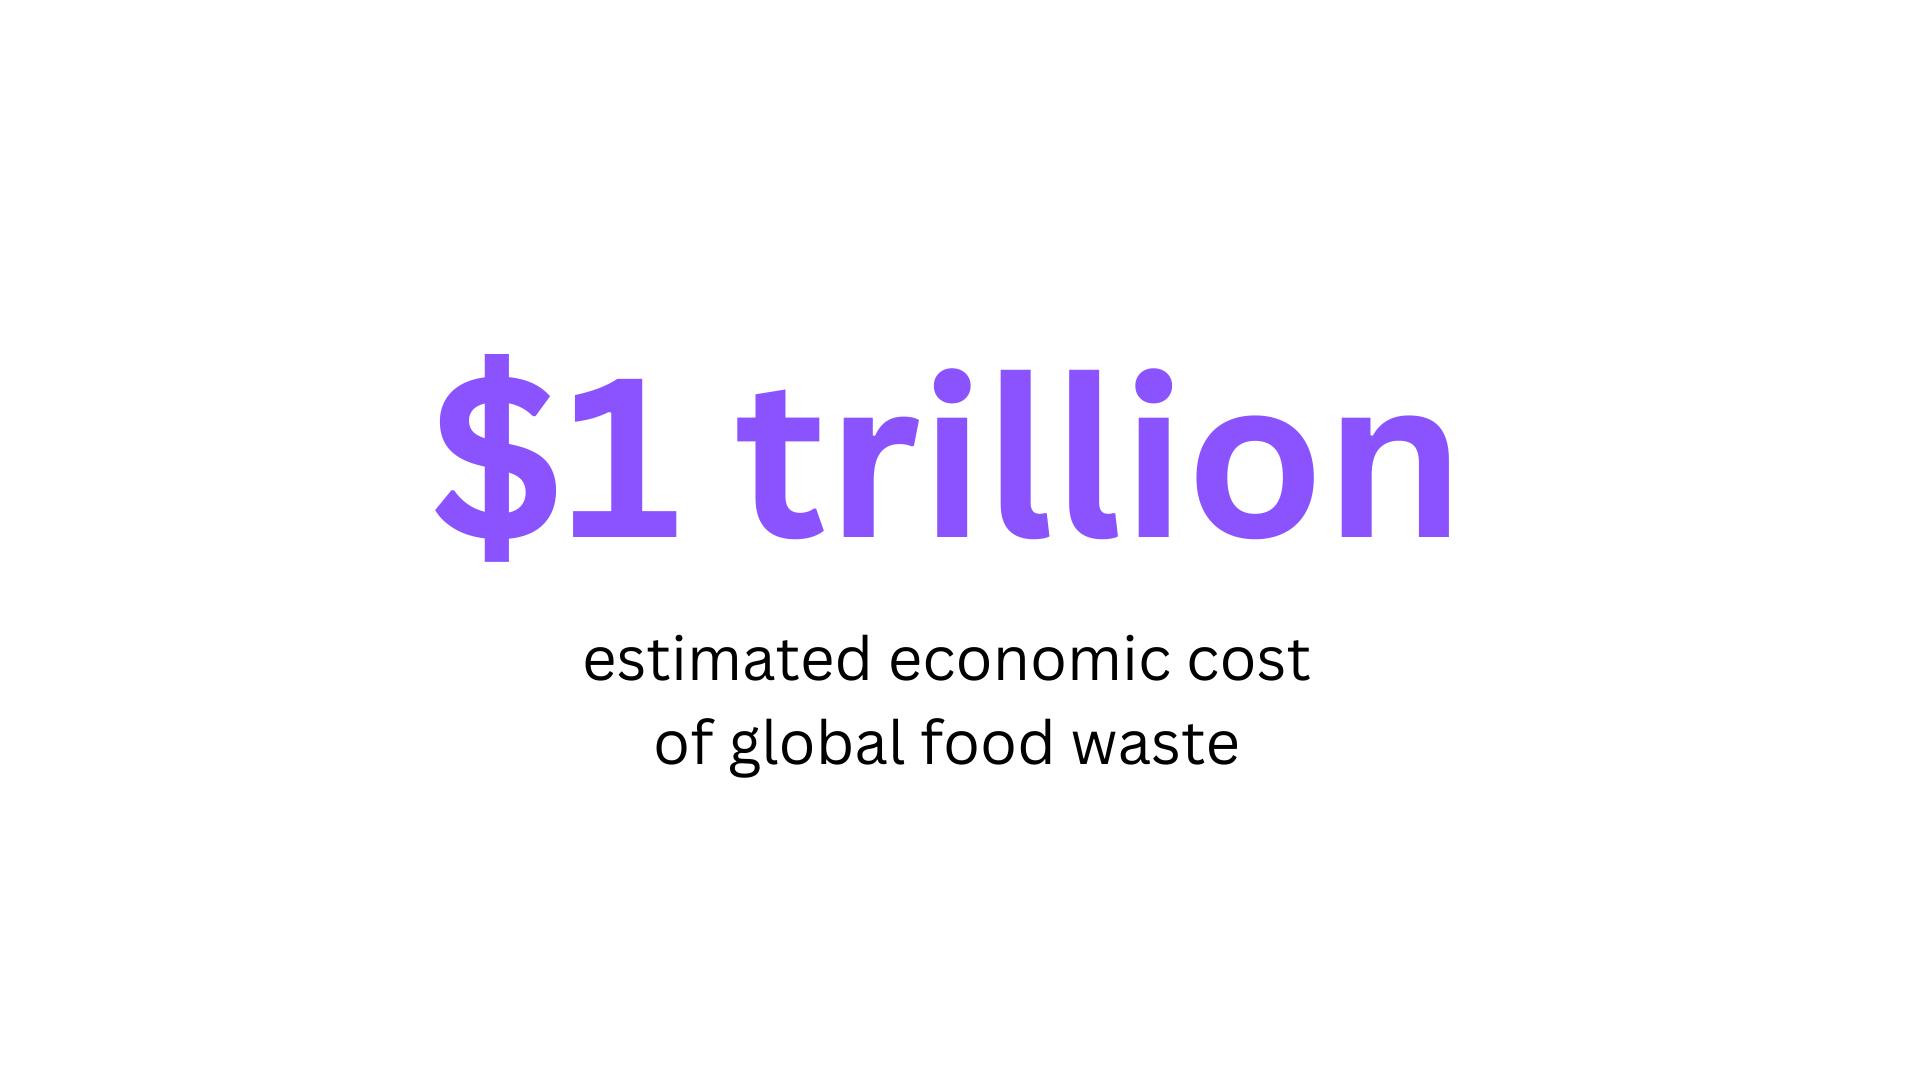 Food waste statistics - The economic impact of global food waste